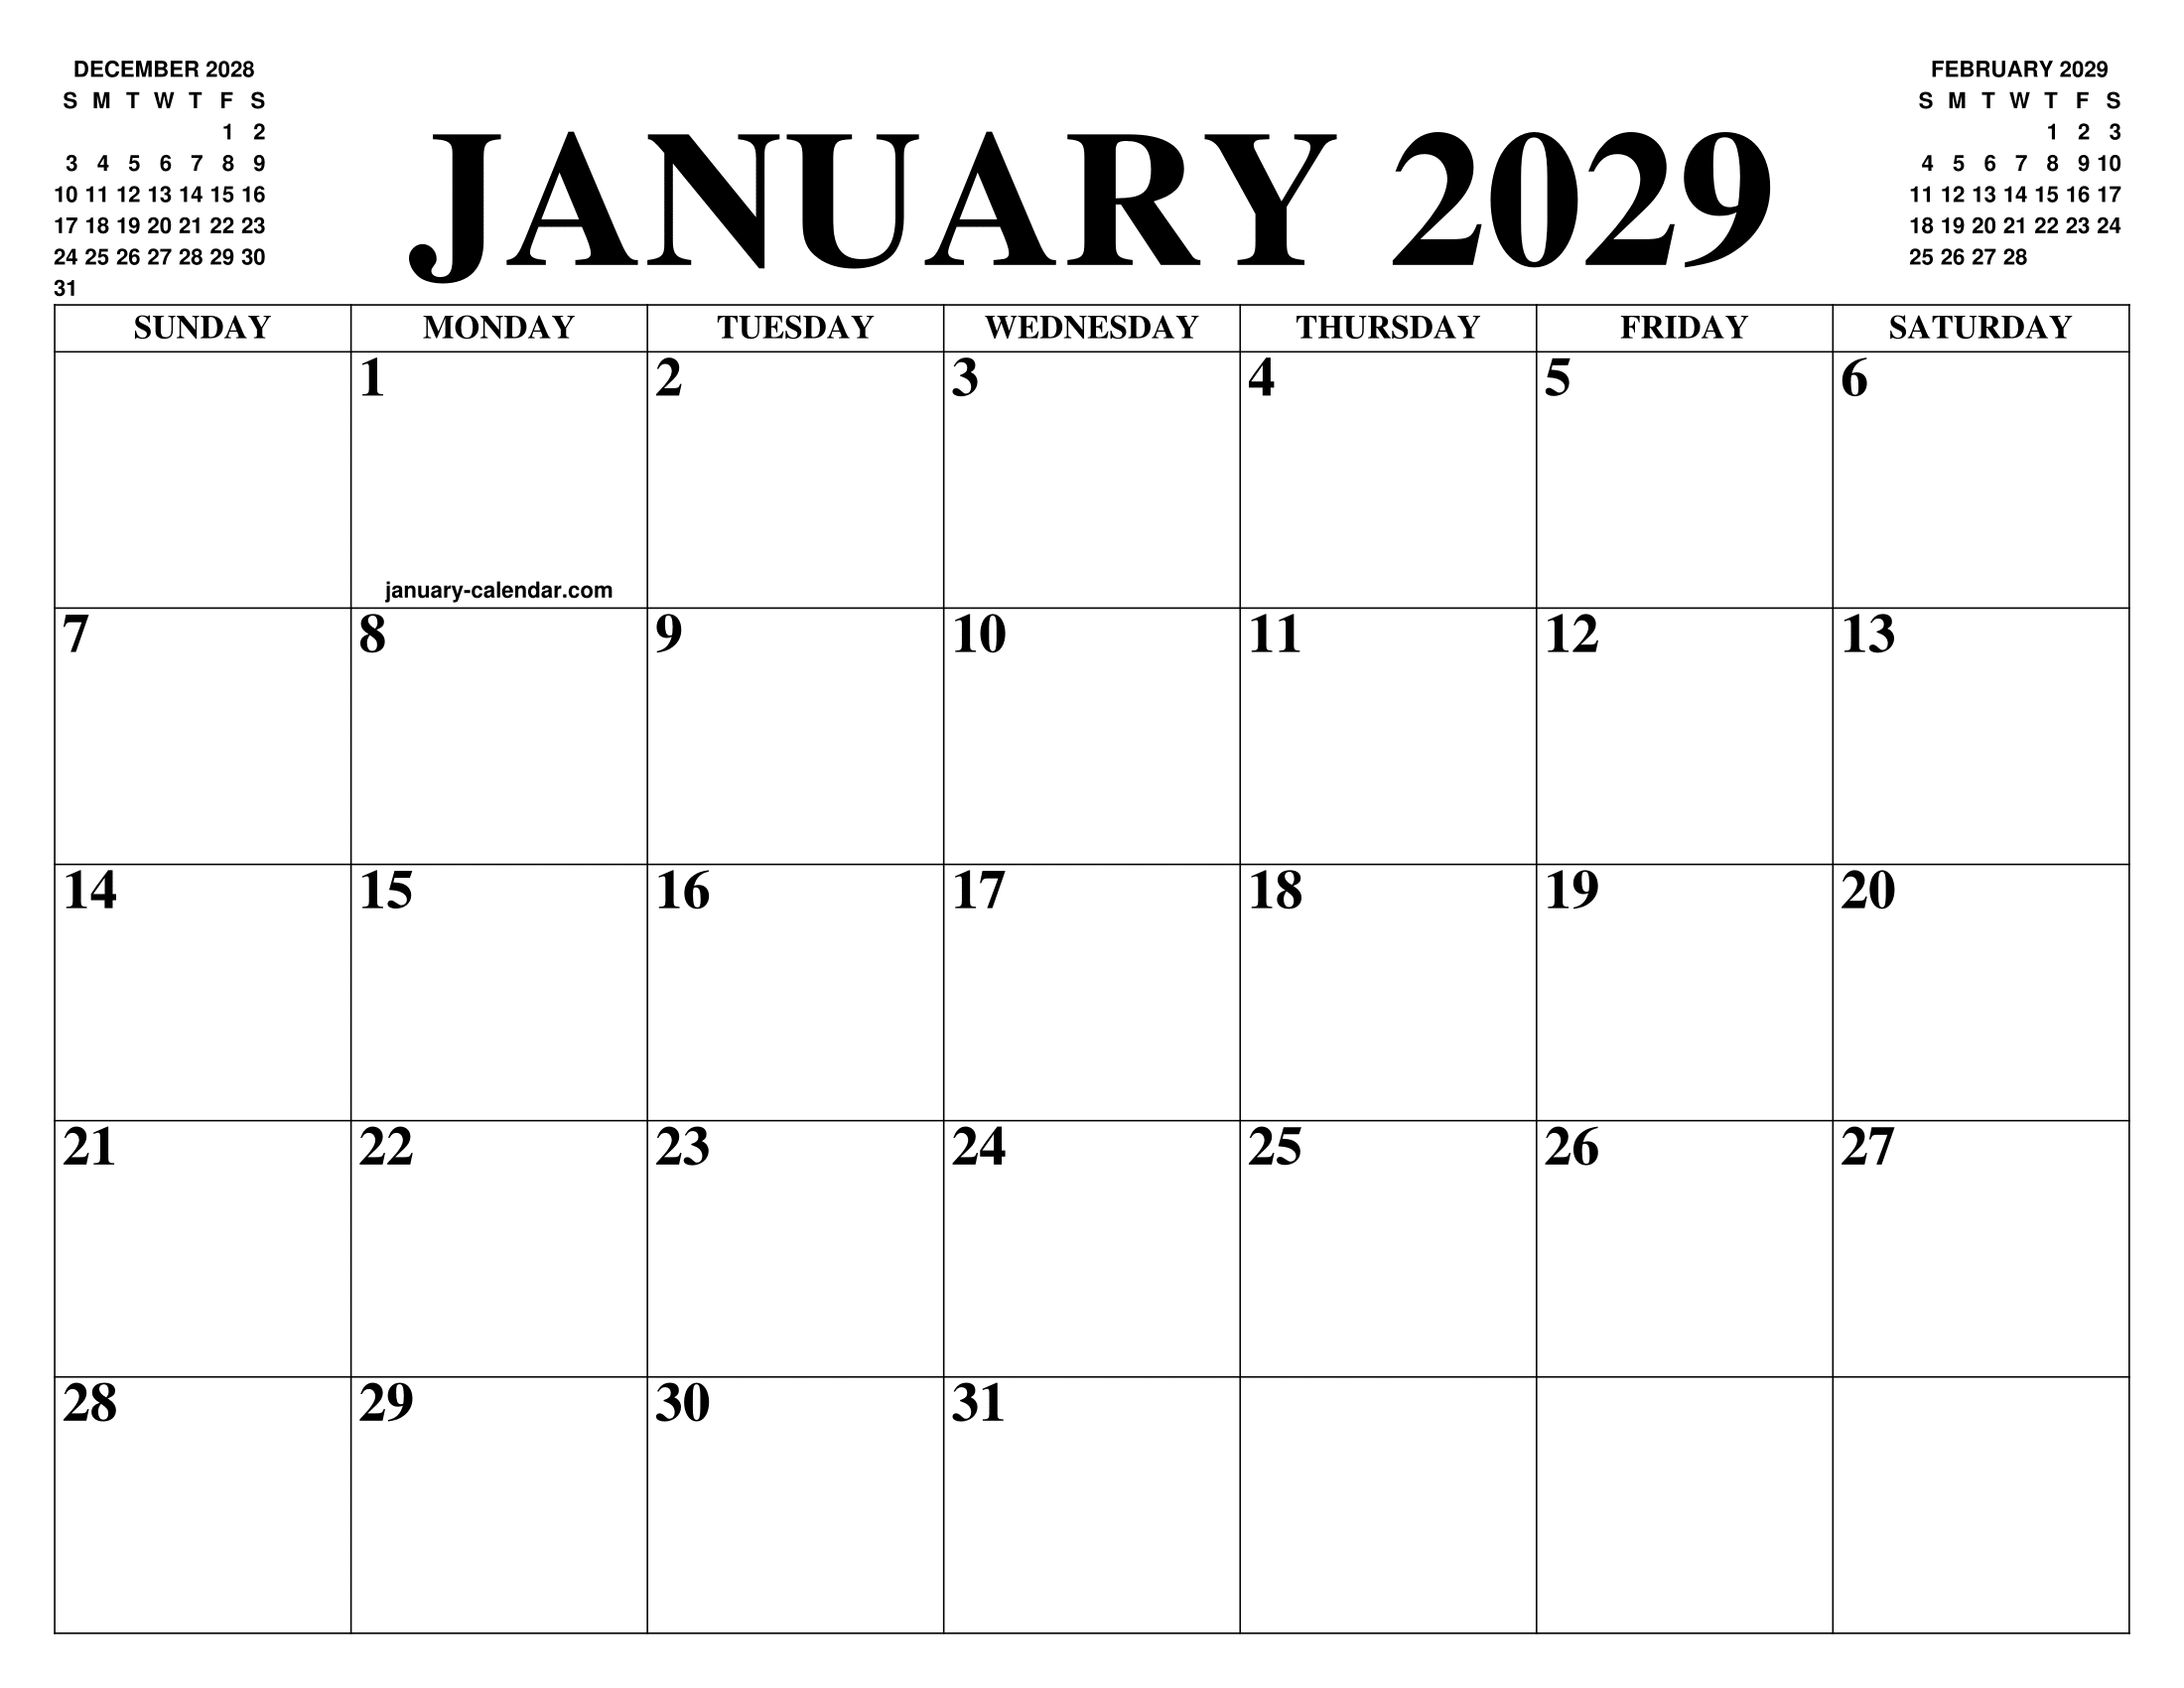 JANUARY 2029 CALENDAR OF THE MONTH FREE PRINTABLE JANUARY CALENDAR OF